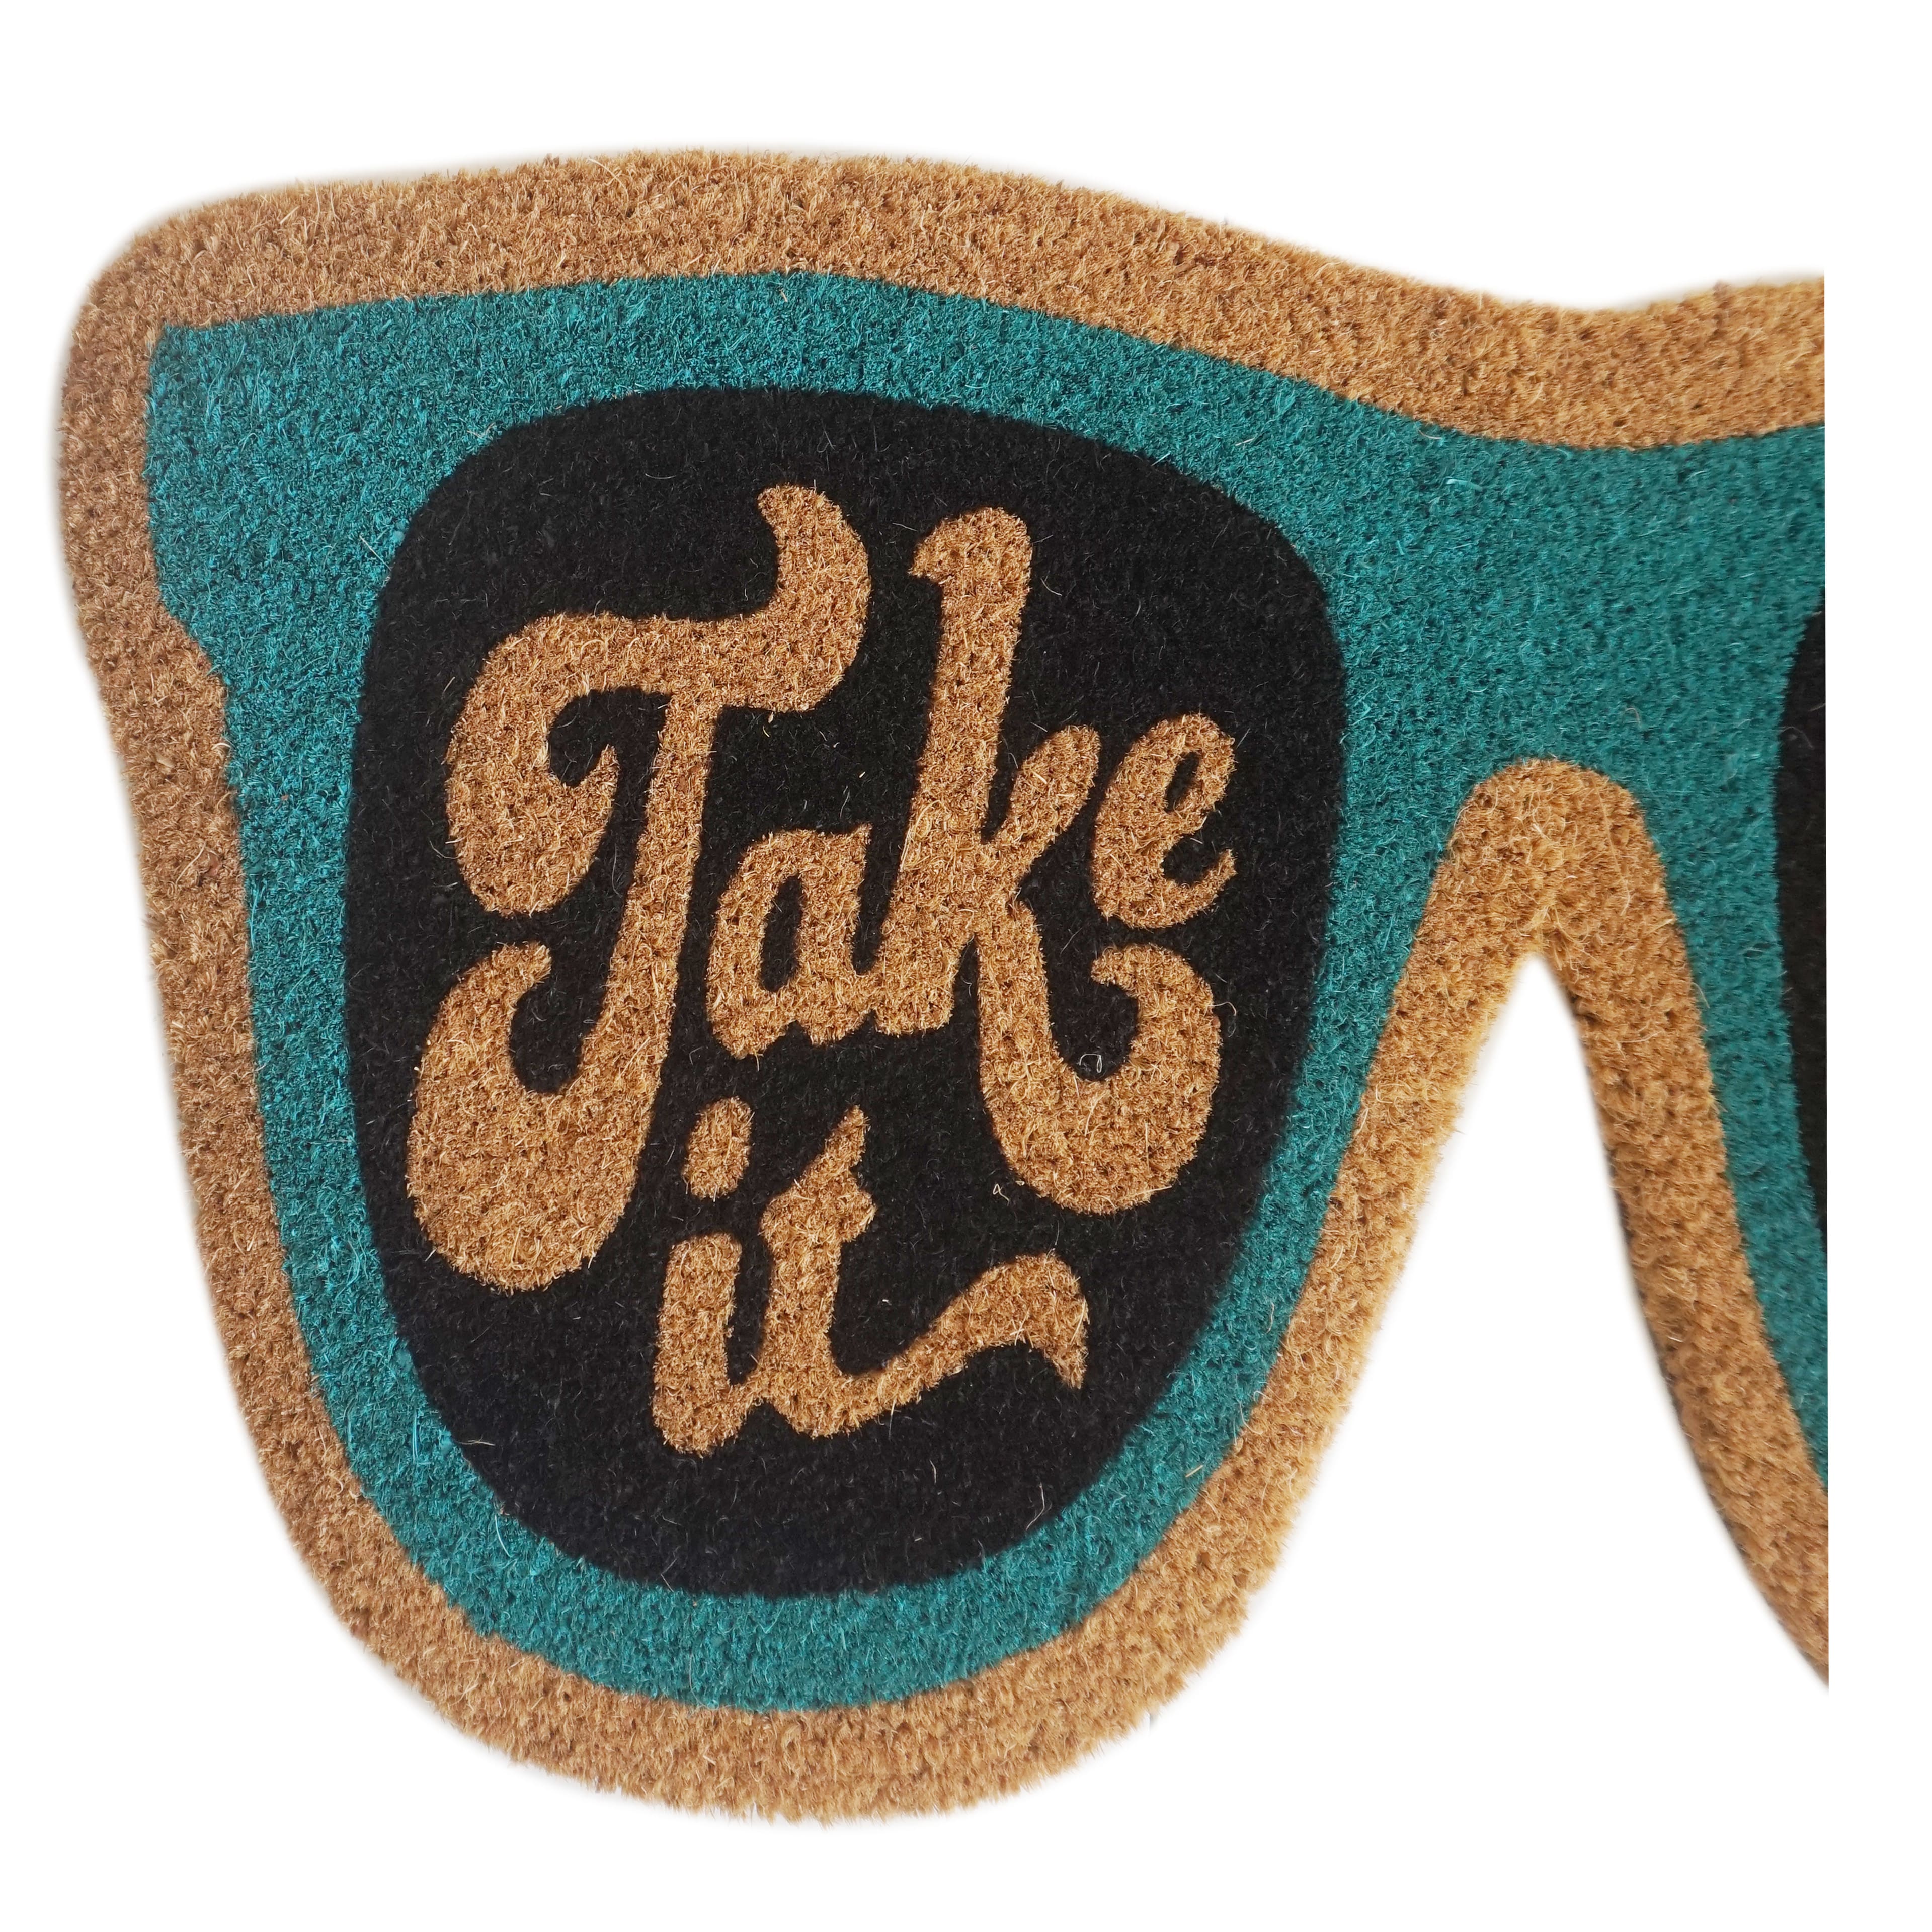 Take It Easy Sunglass Doormat by Ashland&#xAE;